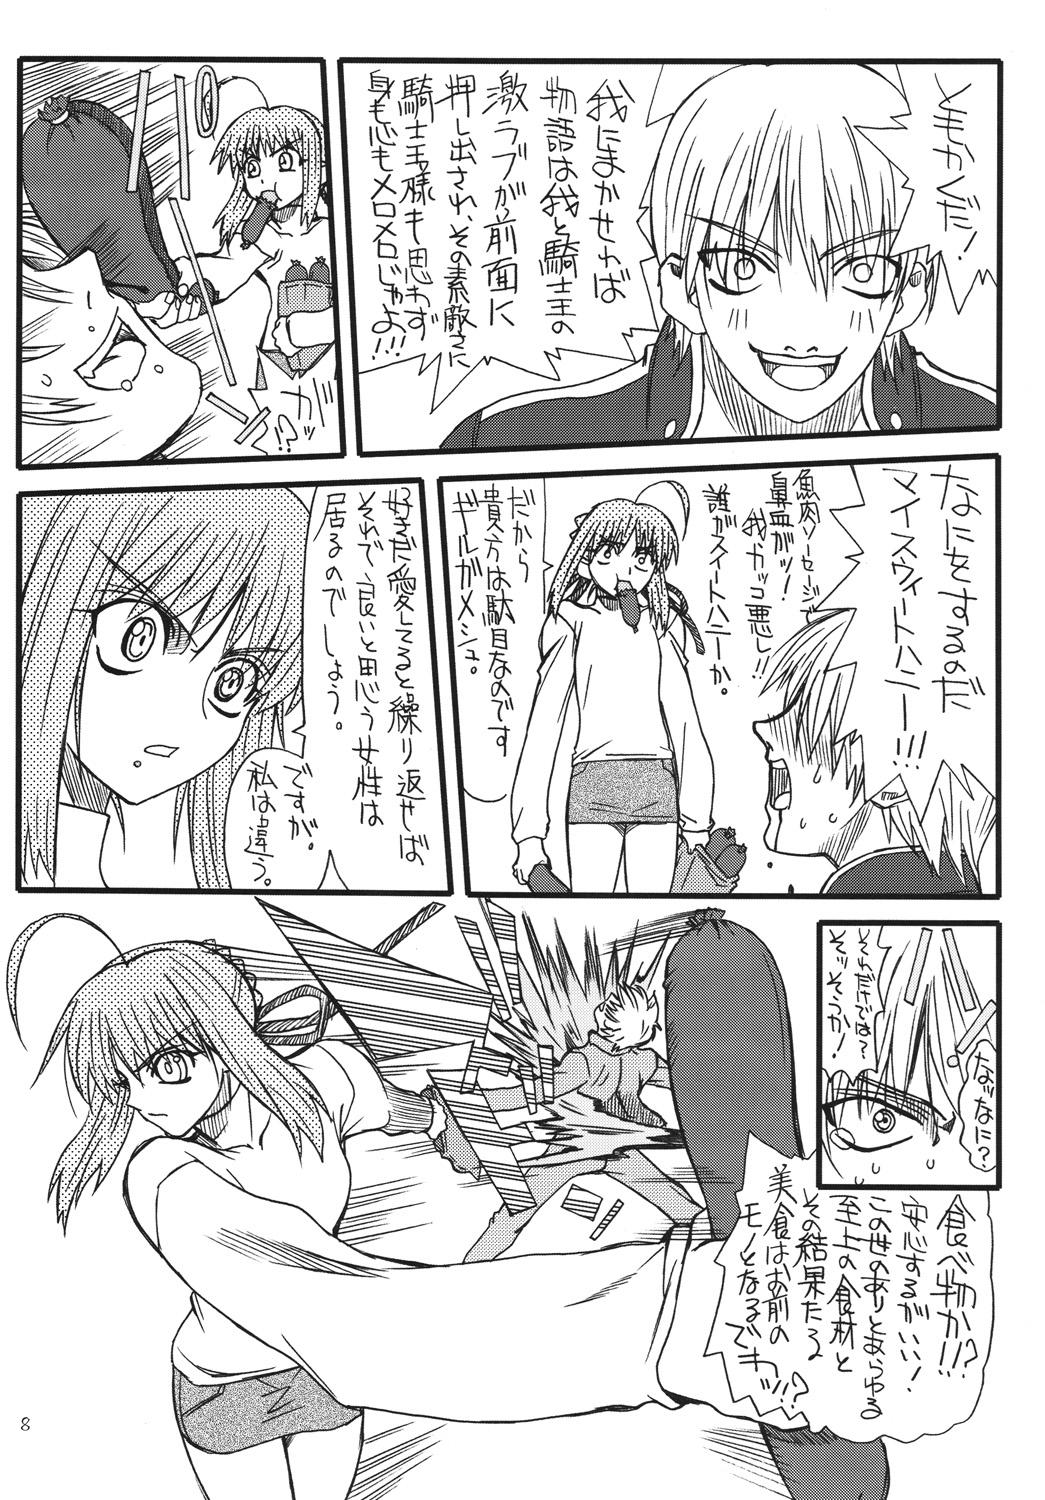 Story Kurenai Hoppe 2 - Fate stay night 8teenxxx - Page 7